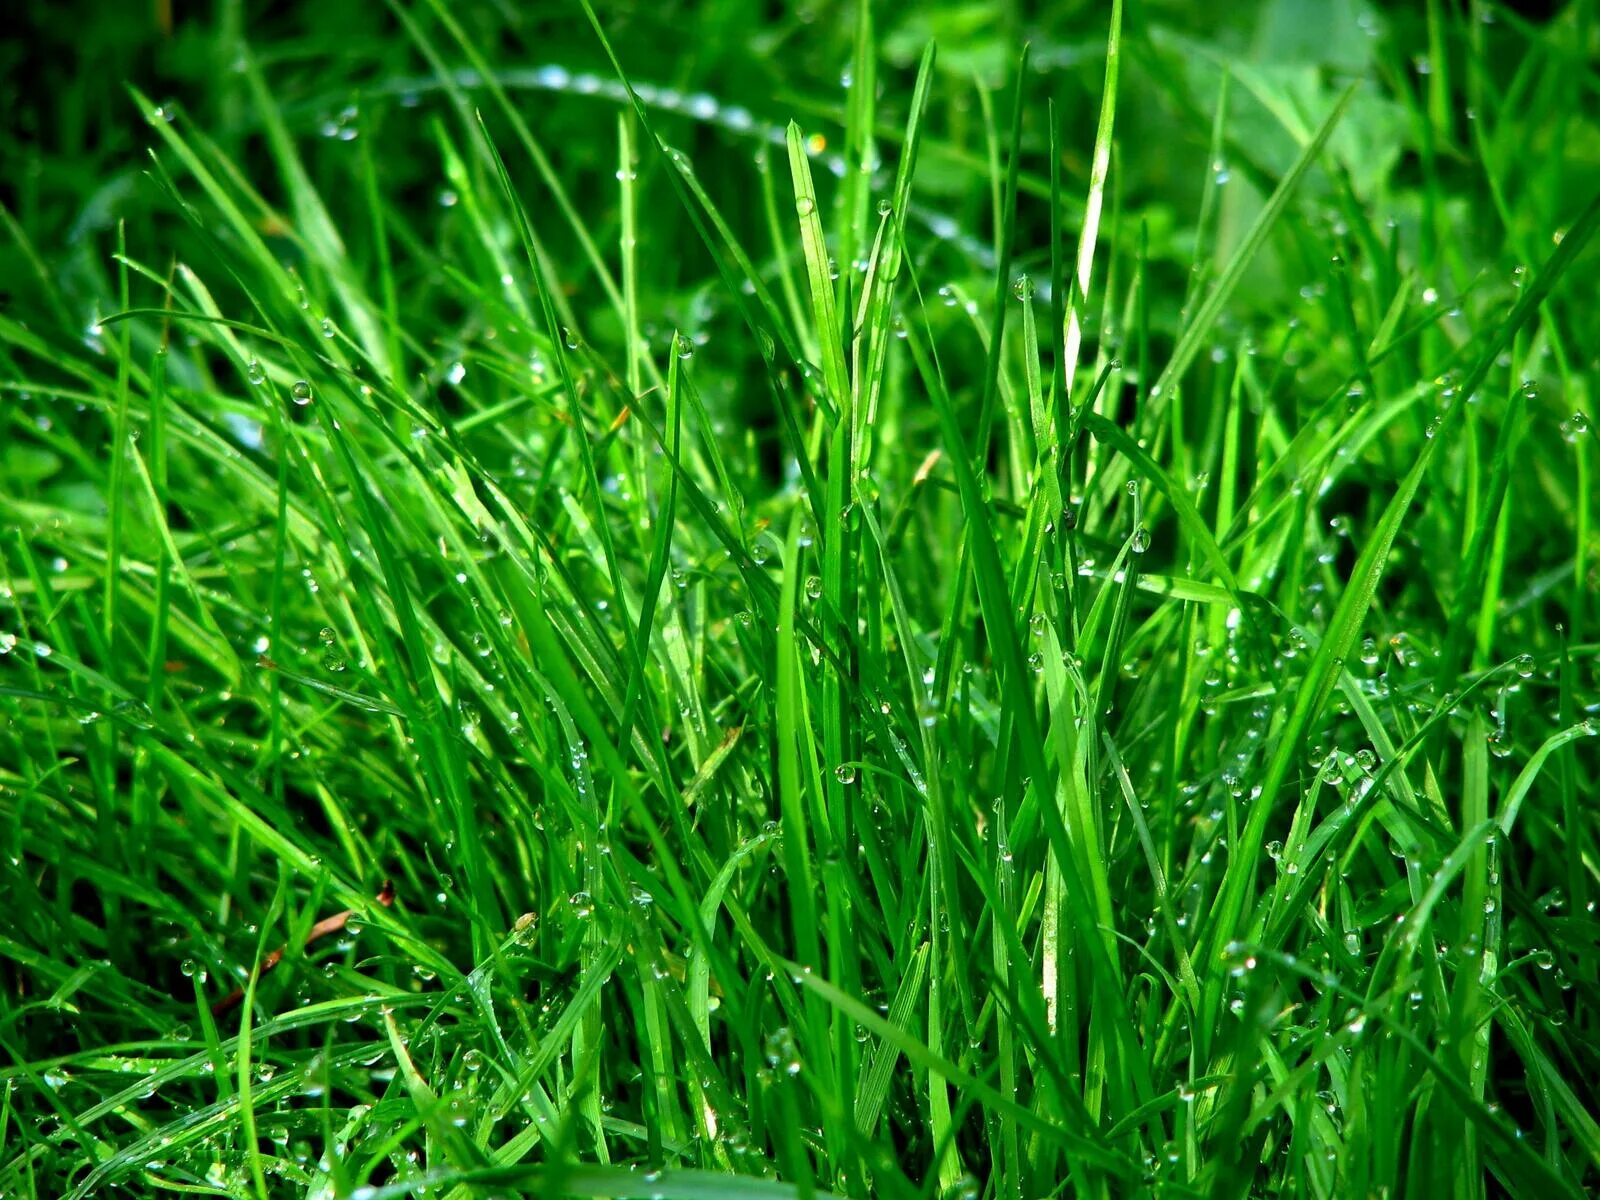 Grass network. Овсянница растение роса. Зеленая трава. Сочная зеленая трава. Густая трава.